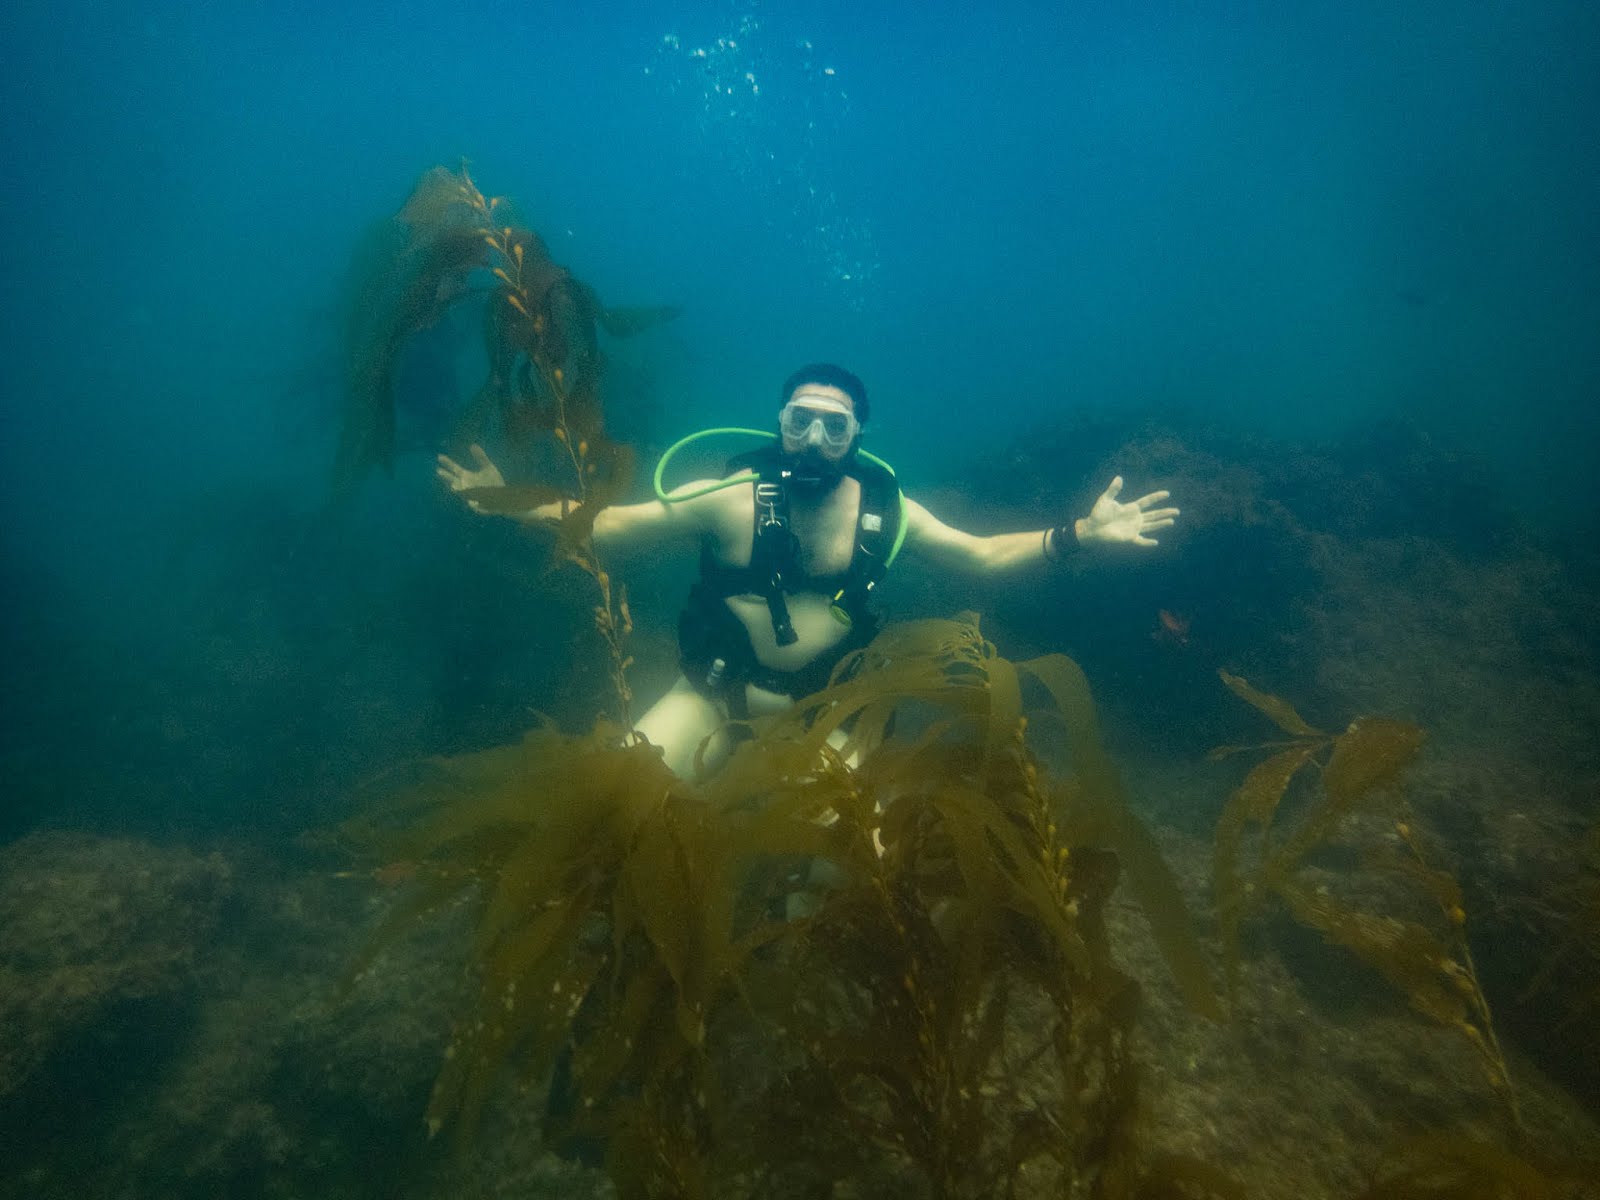 alexandra horne recommends Naked Scuba Diving